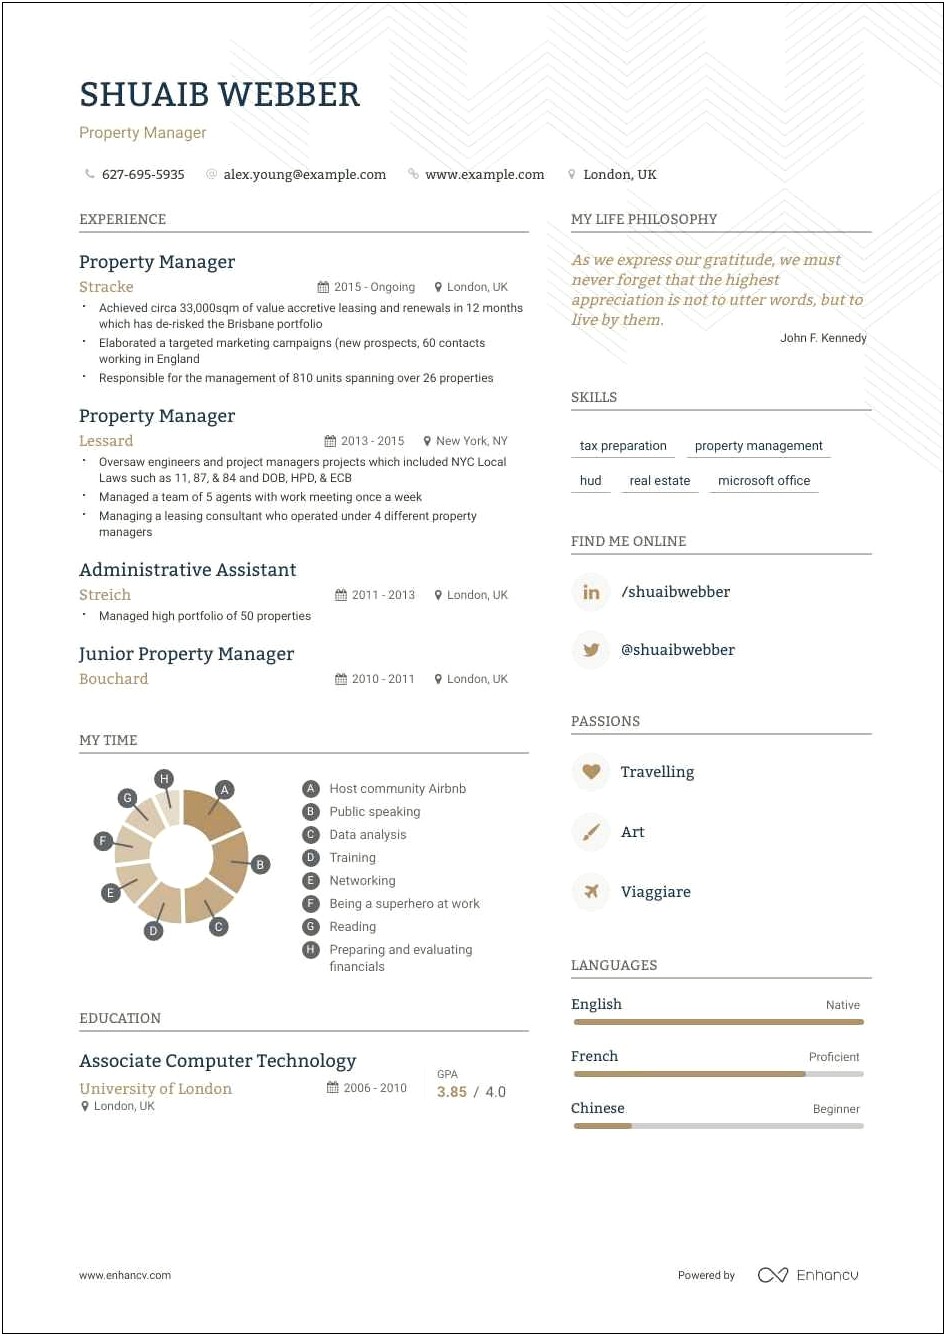 Resume Professional Summary Property Manager